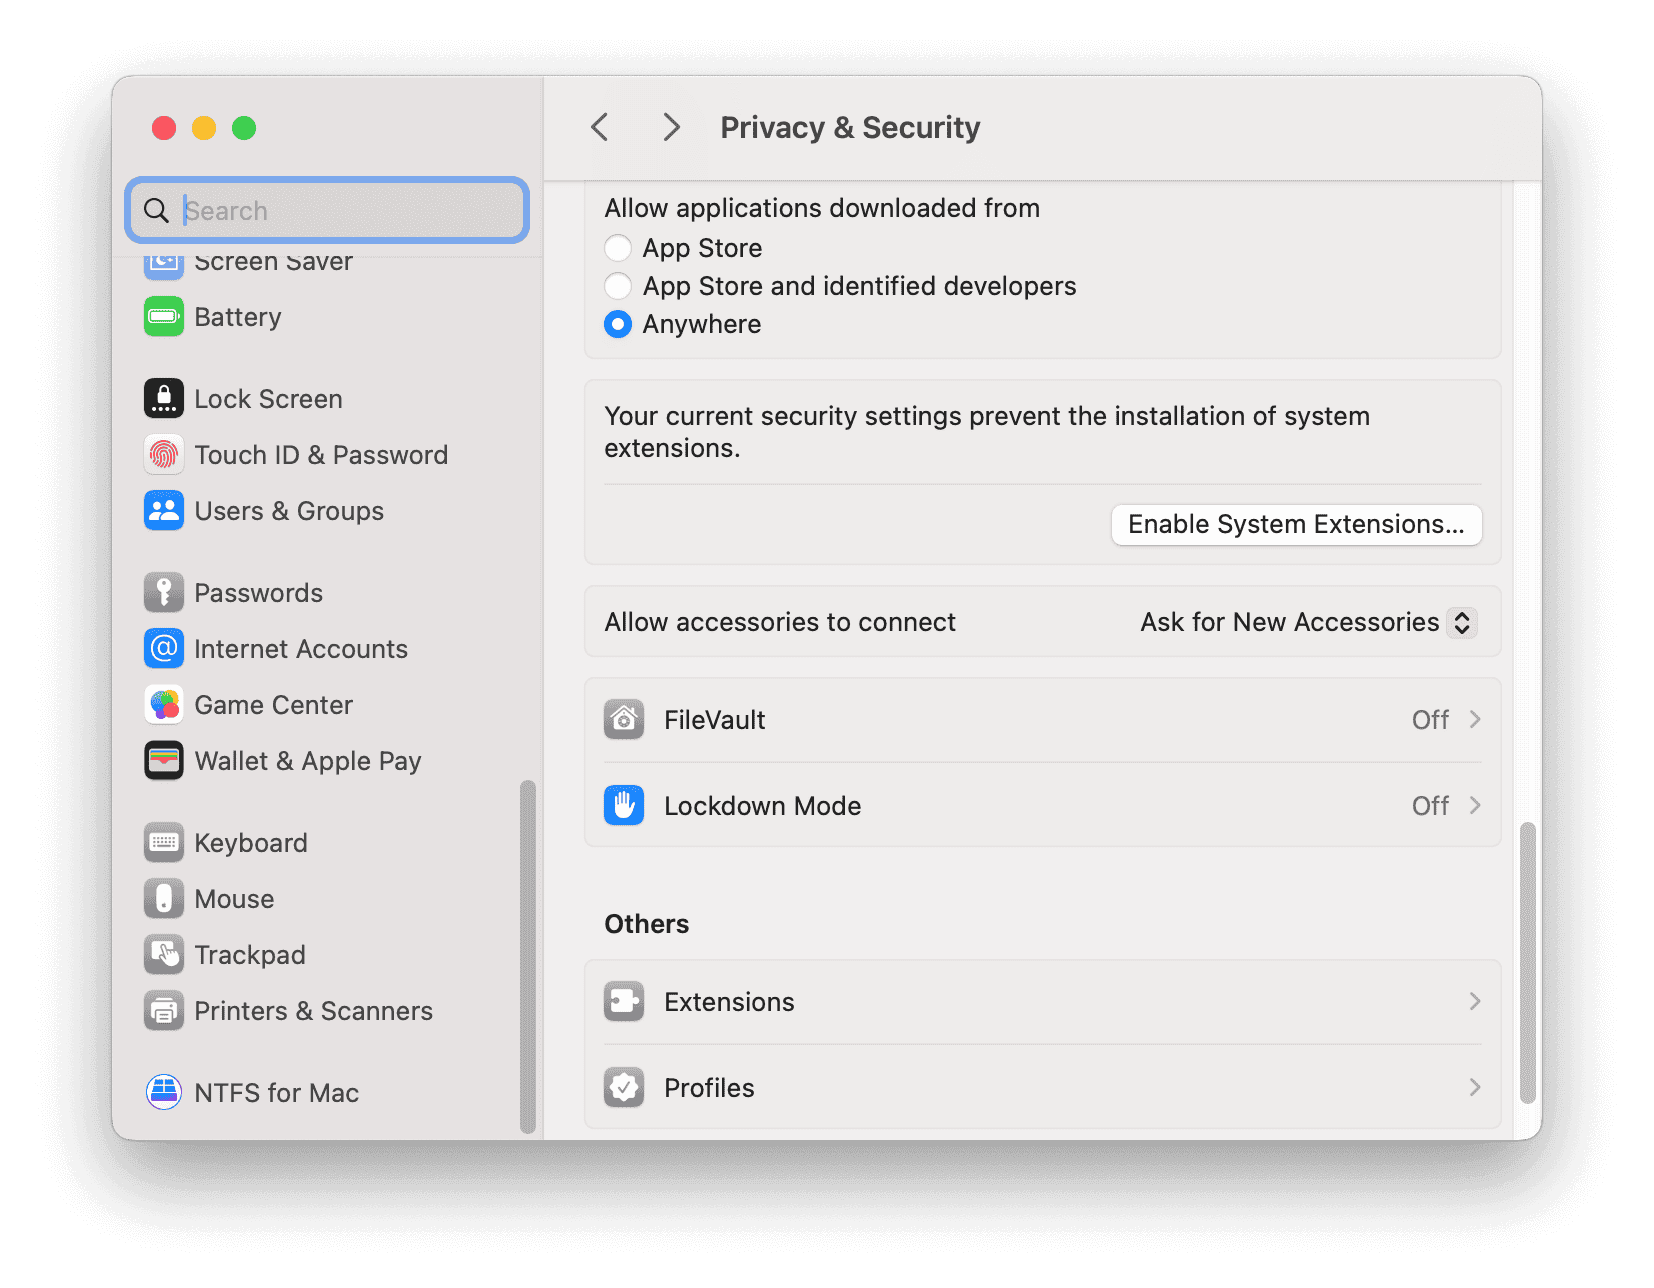 Check and Change NTFS for Mac Settings